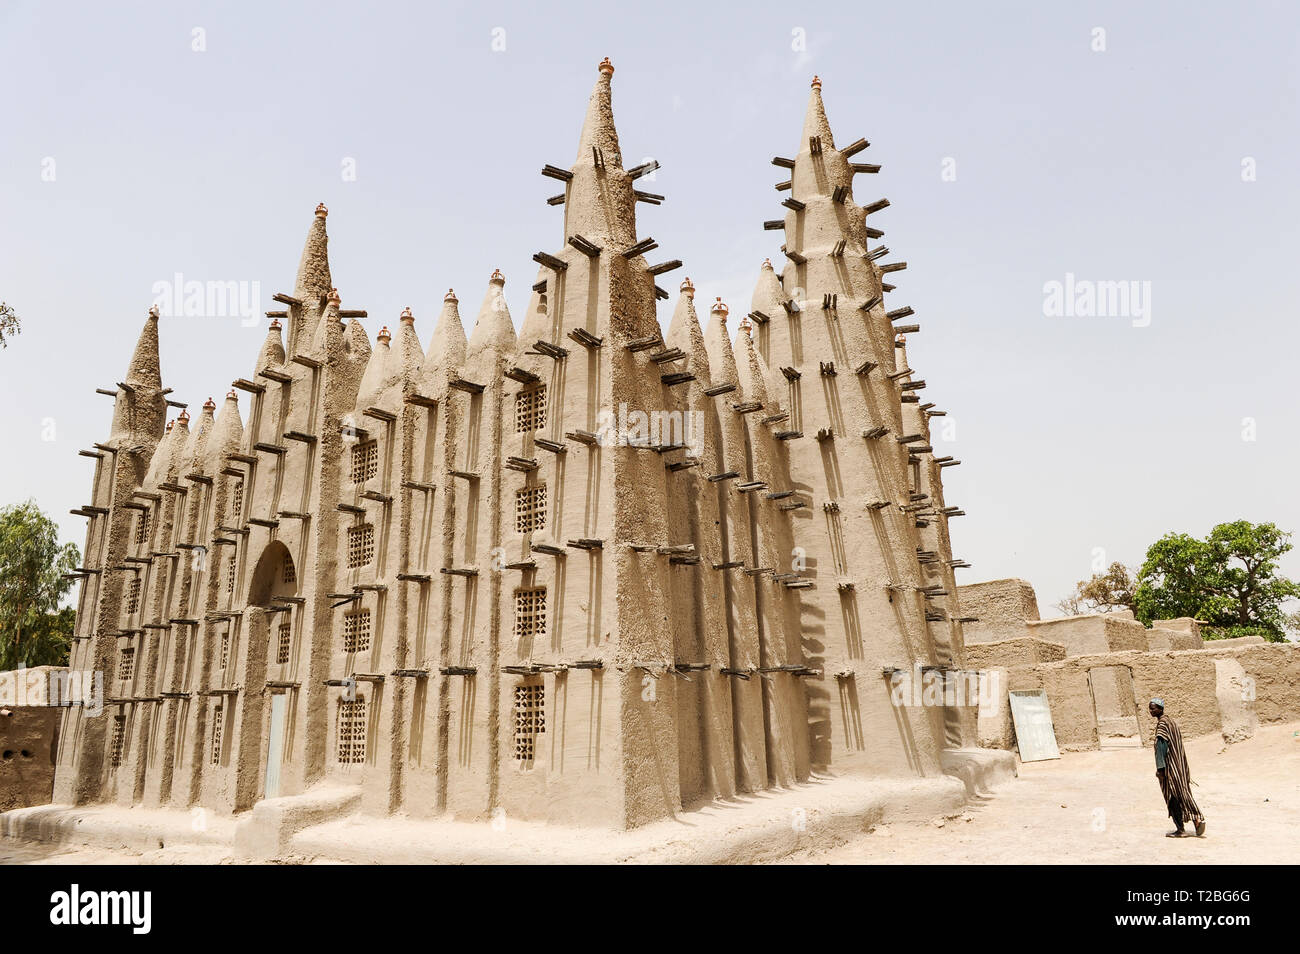 MALI, Mopti, Moschee aus Lehm gebaut Stockfoto